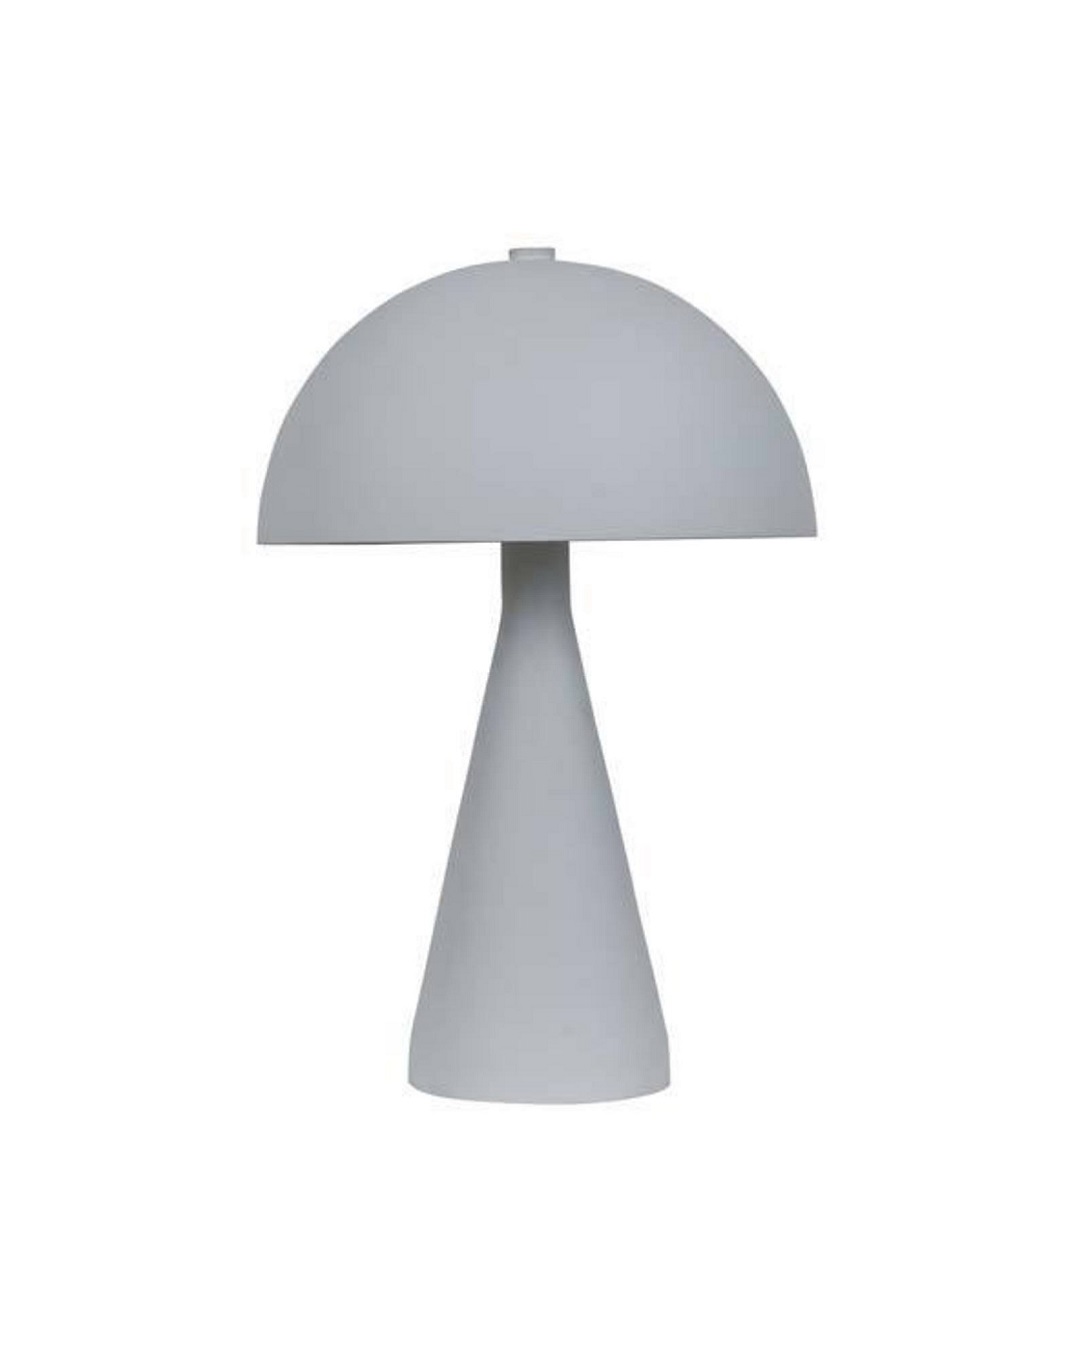 Easton dome table lamp grey